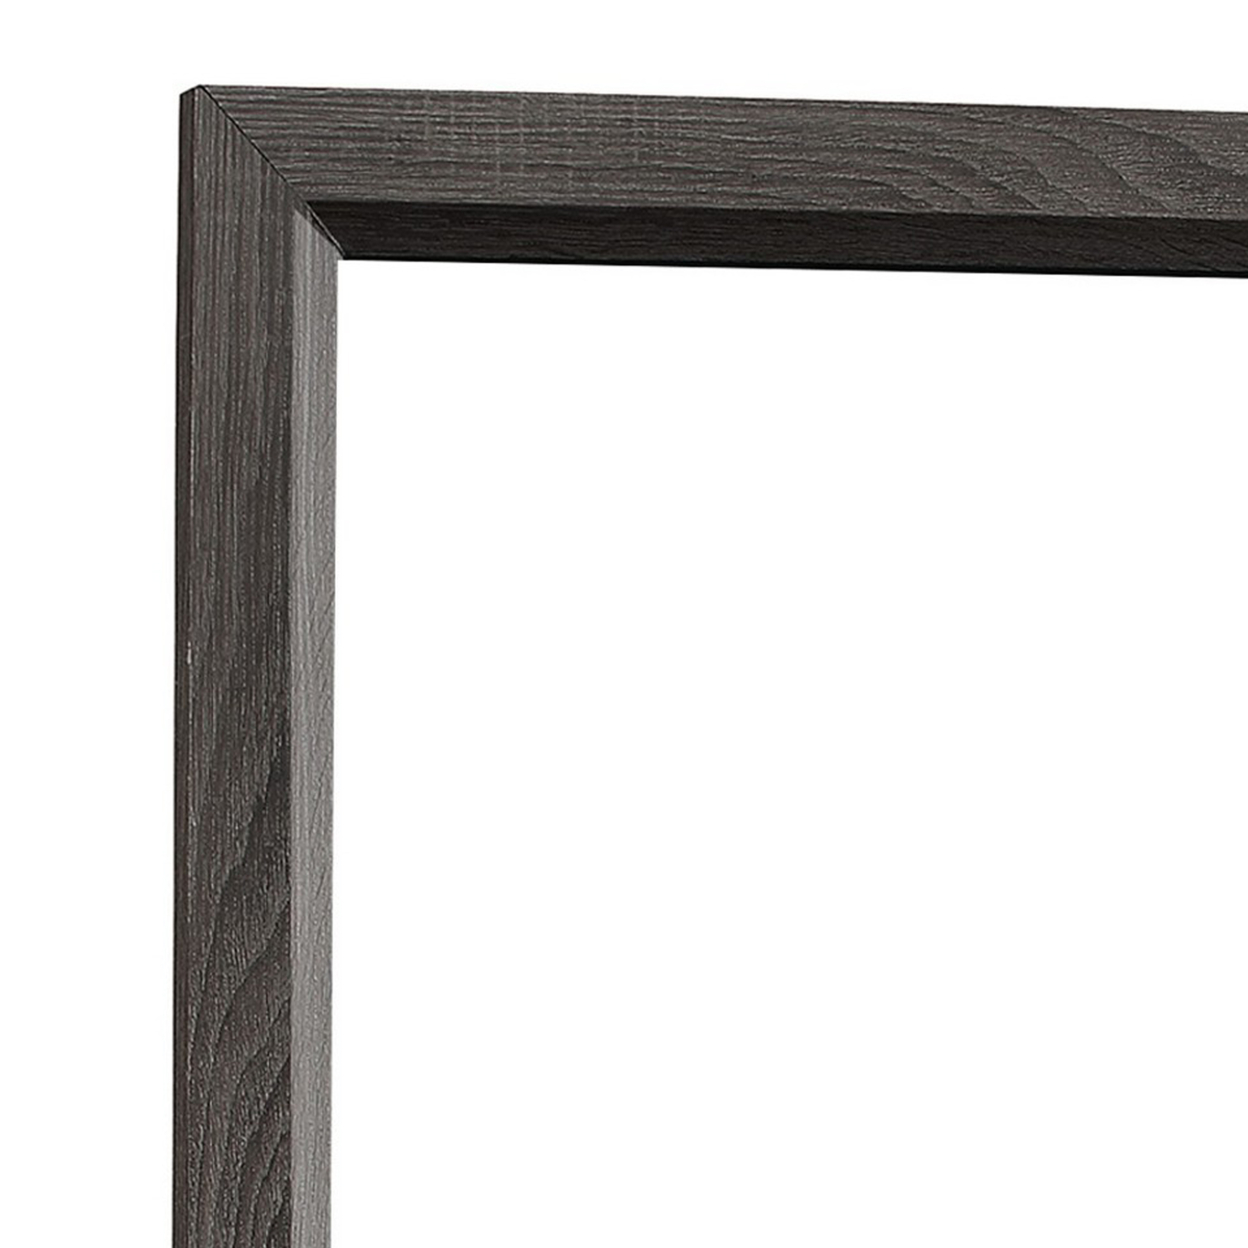 Transitional Rectangular Mirror With Wooden Encasing And Grain Details,Gray- Saltoro Sherpi